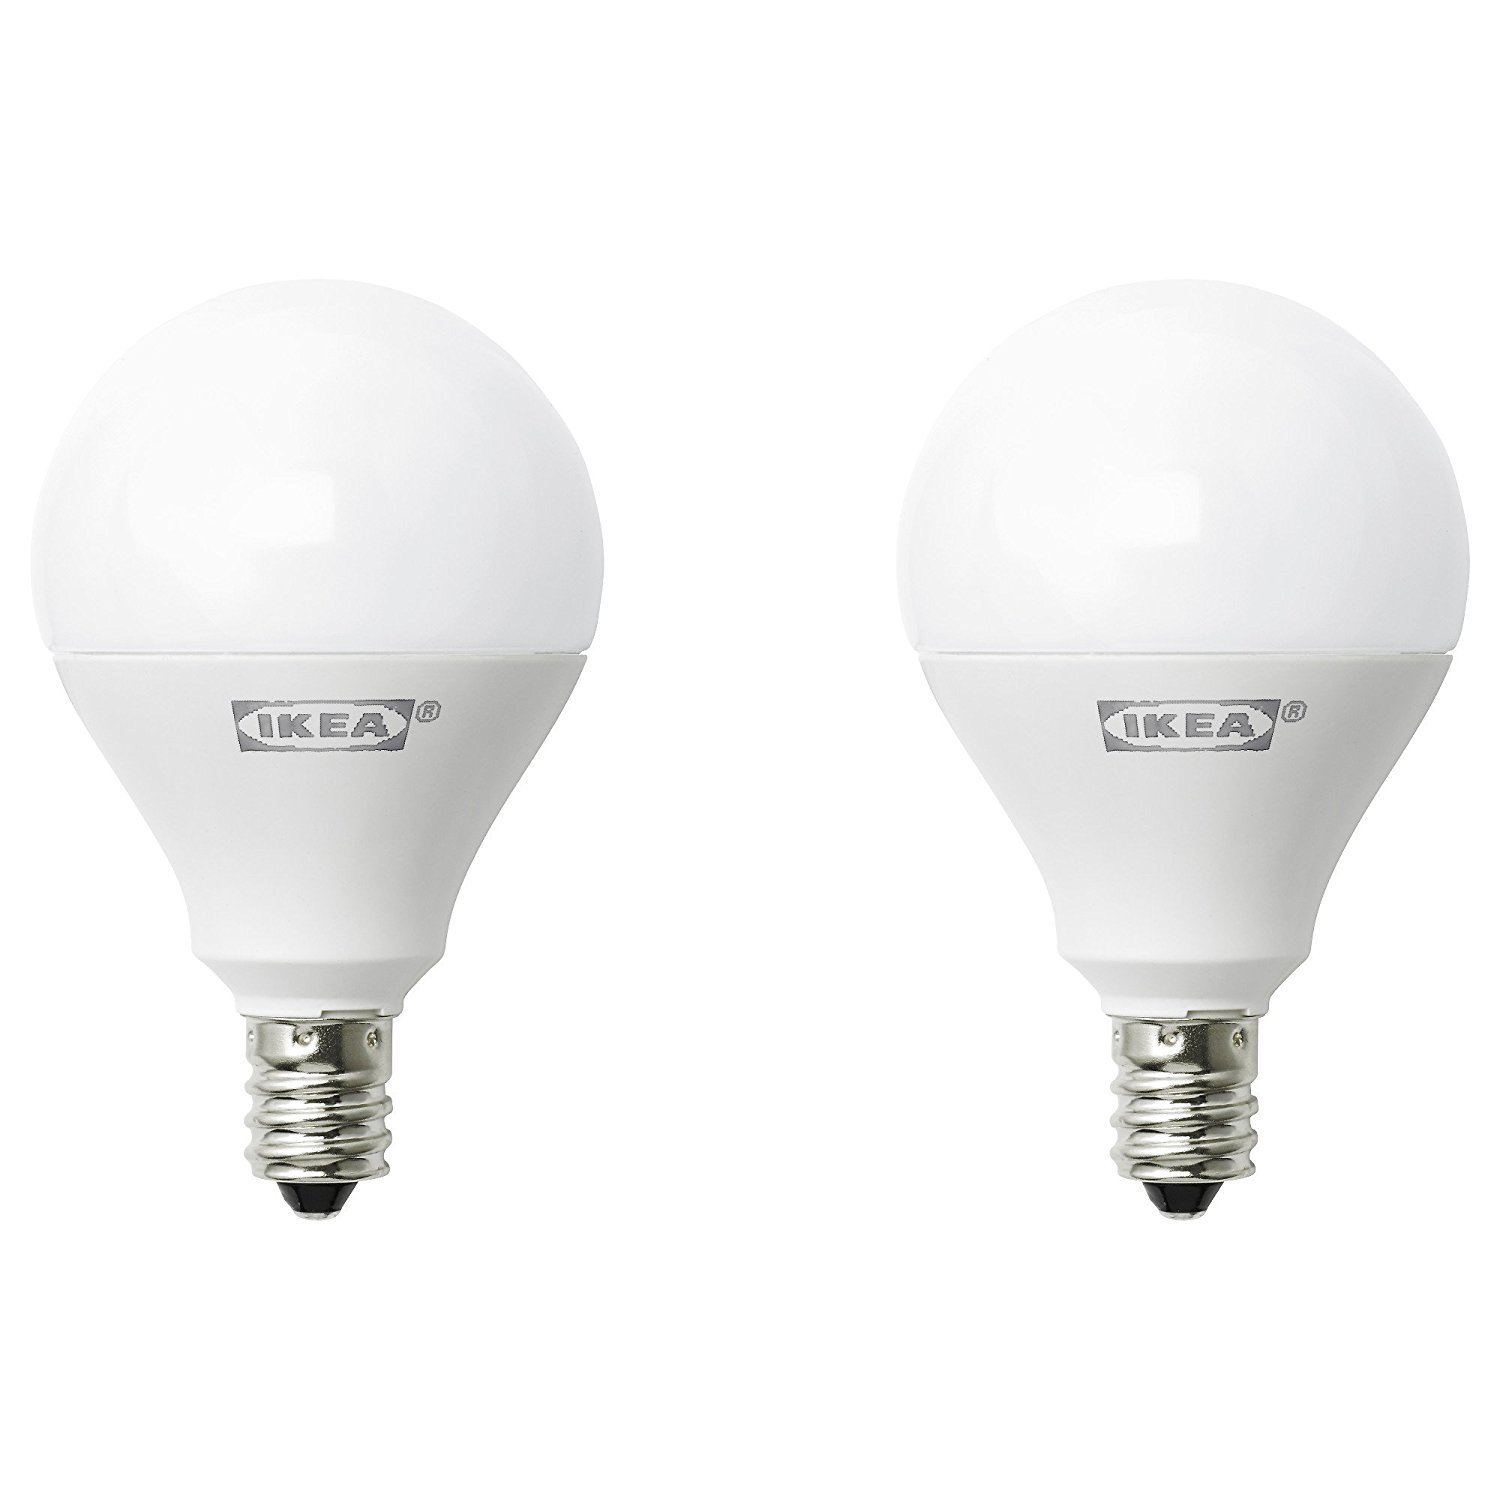 Amazon.com: Ikea E12 400 Lumen LED Light Bulb 5 Watt - Pack of 2 ...